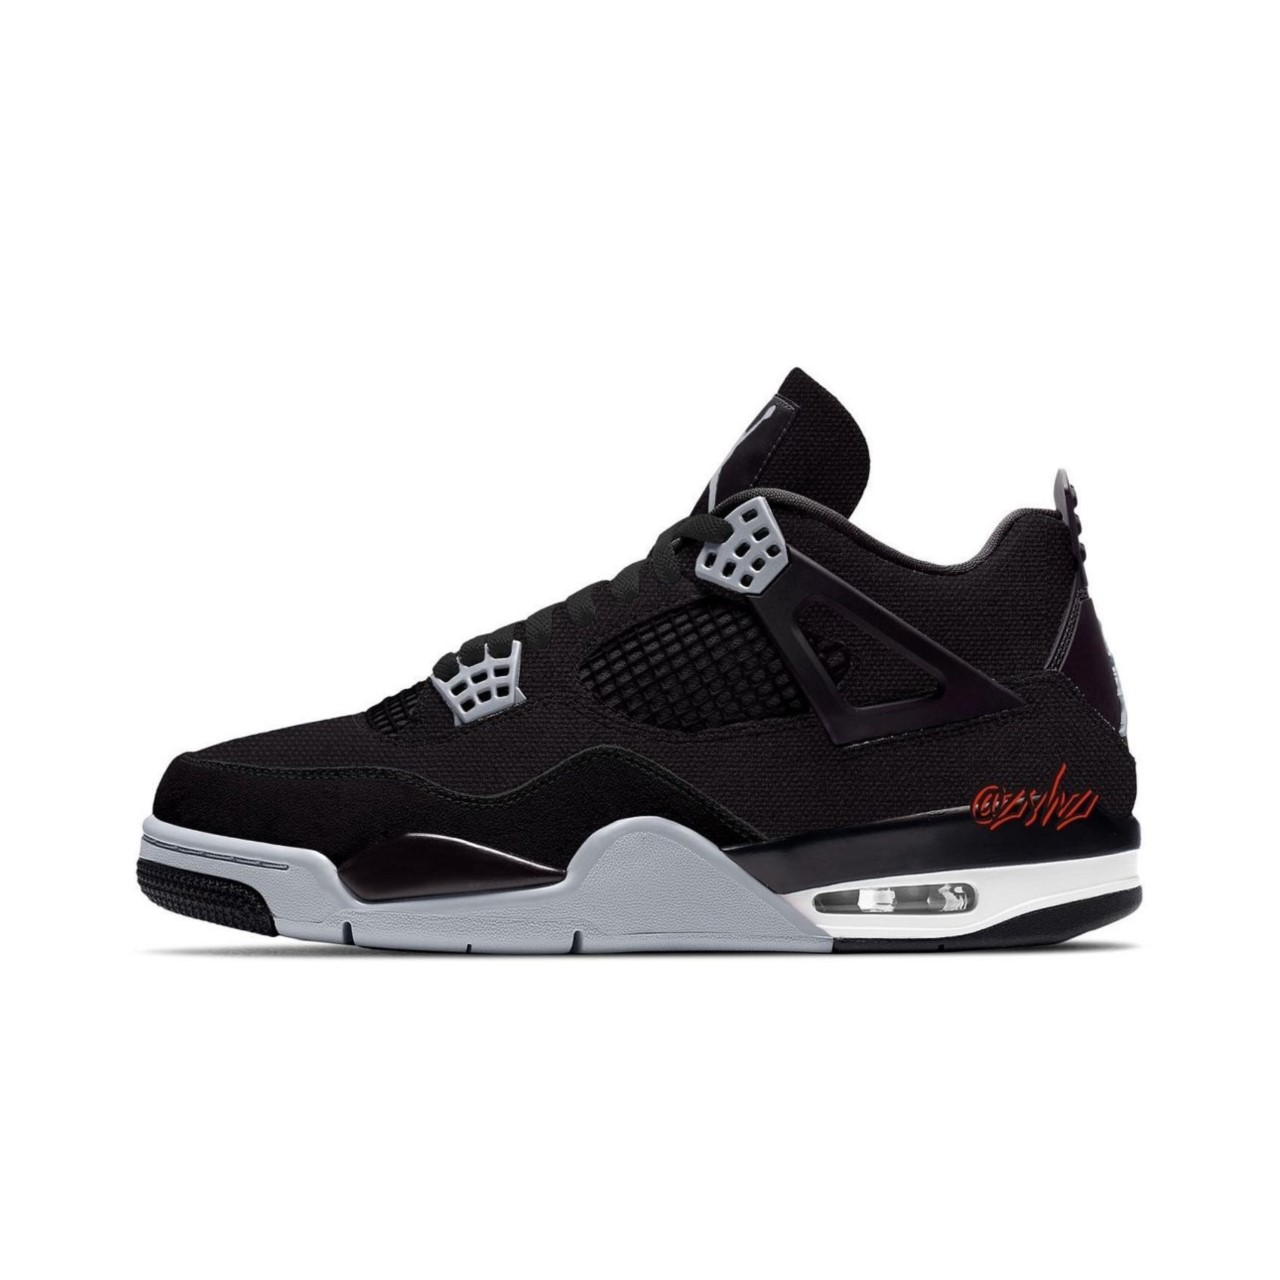 Air Jordan 4 Retro “Black Canvas” Release Date